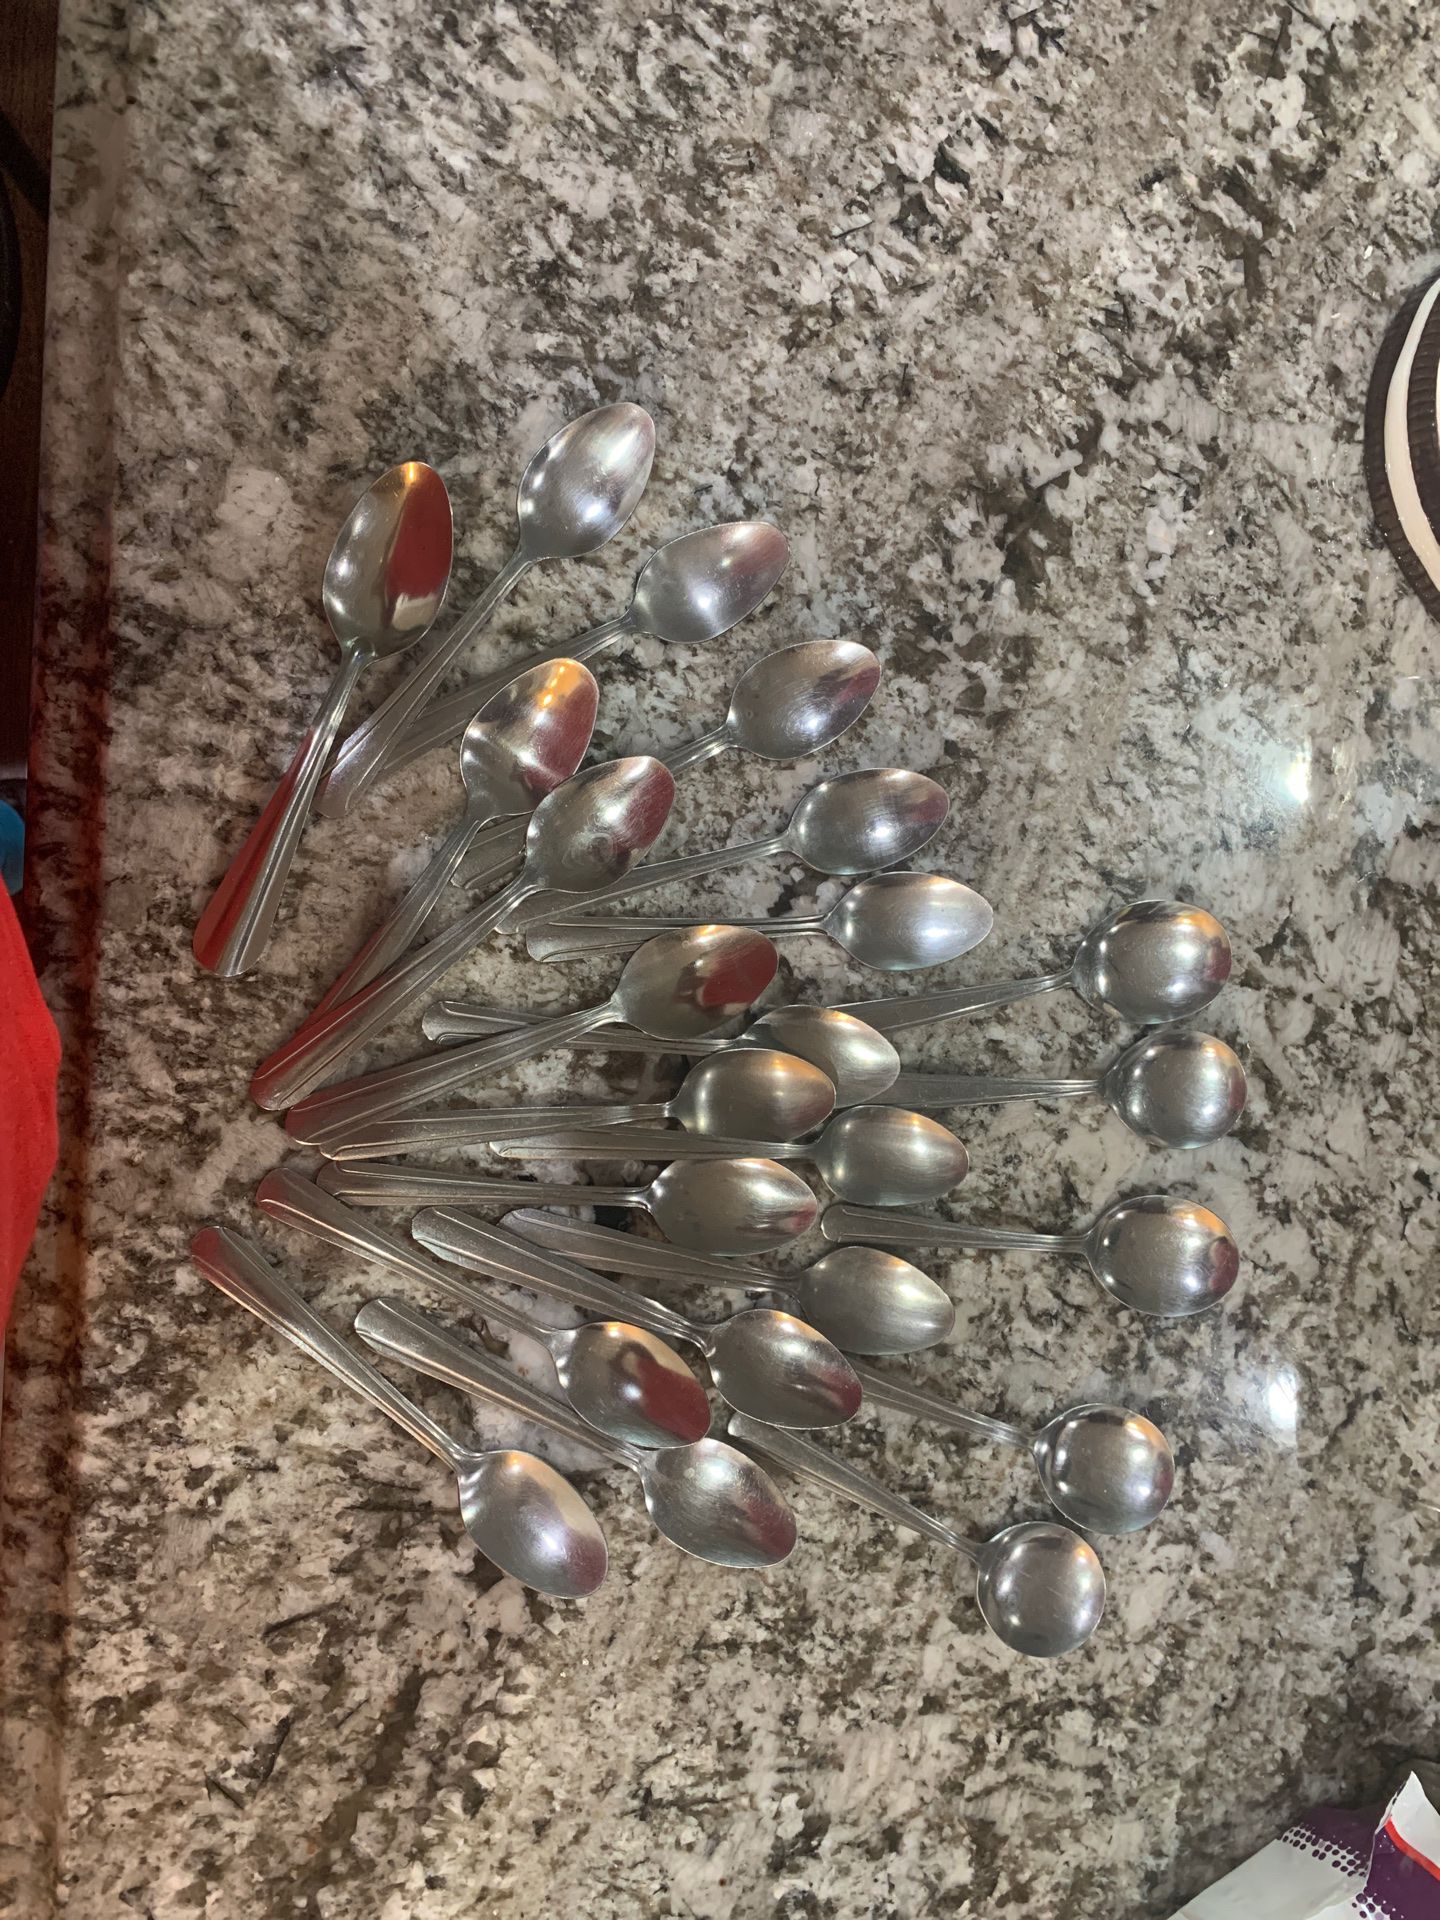 Twenty three spoons